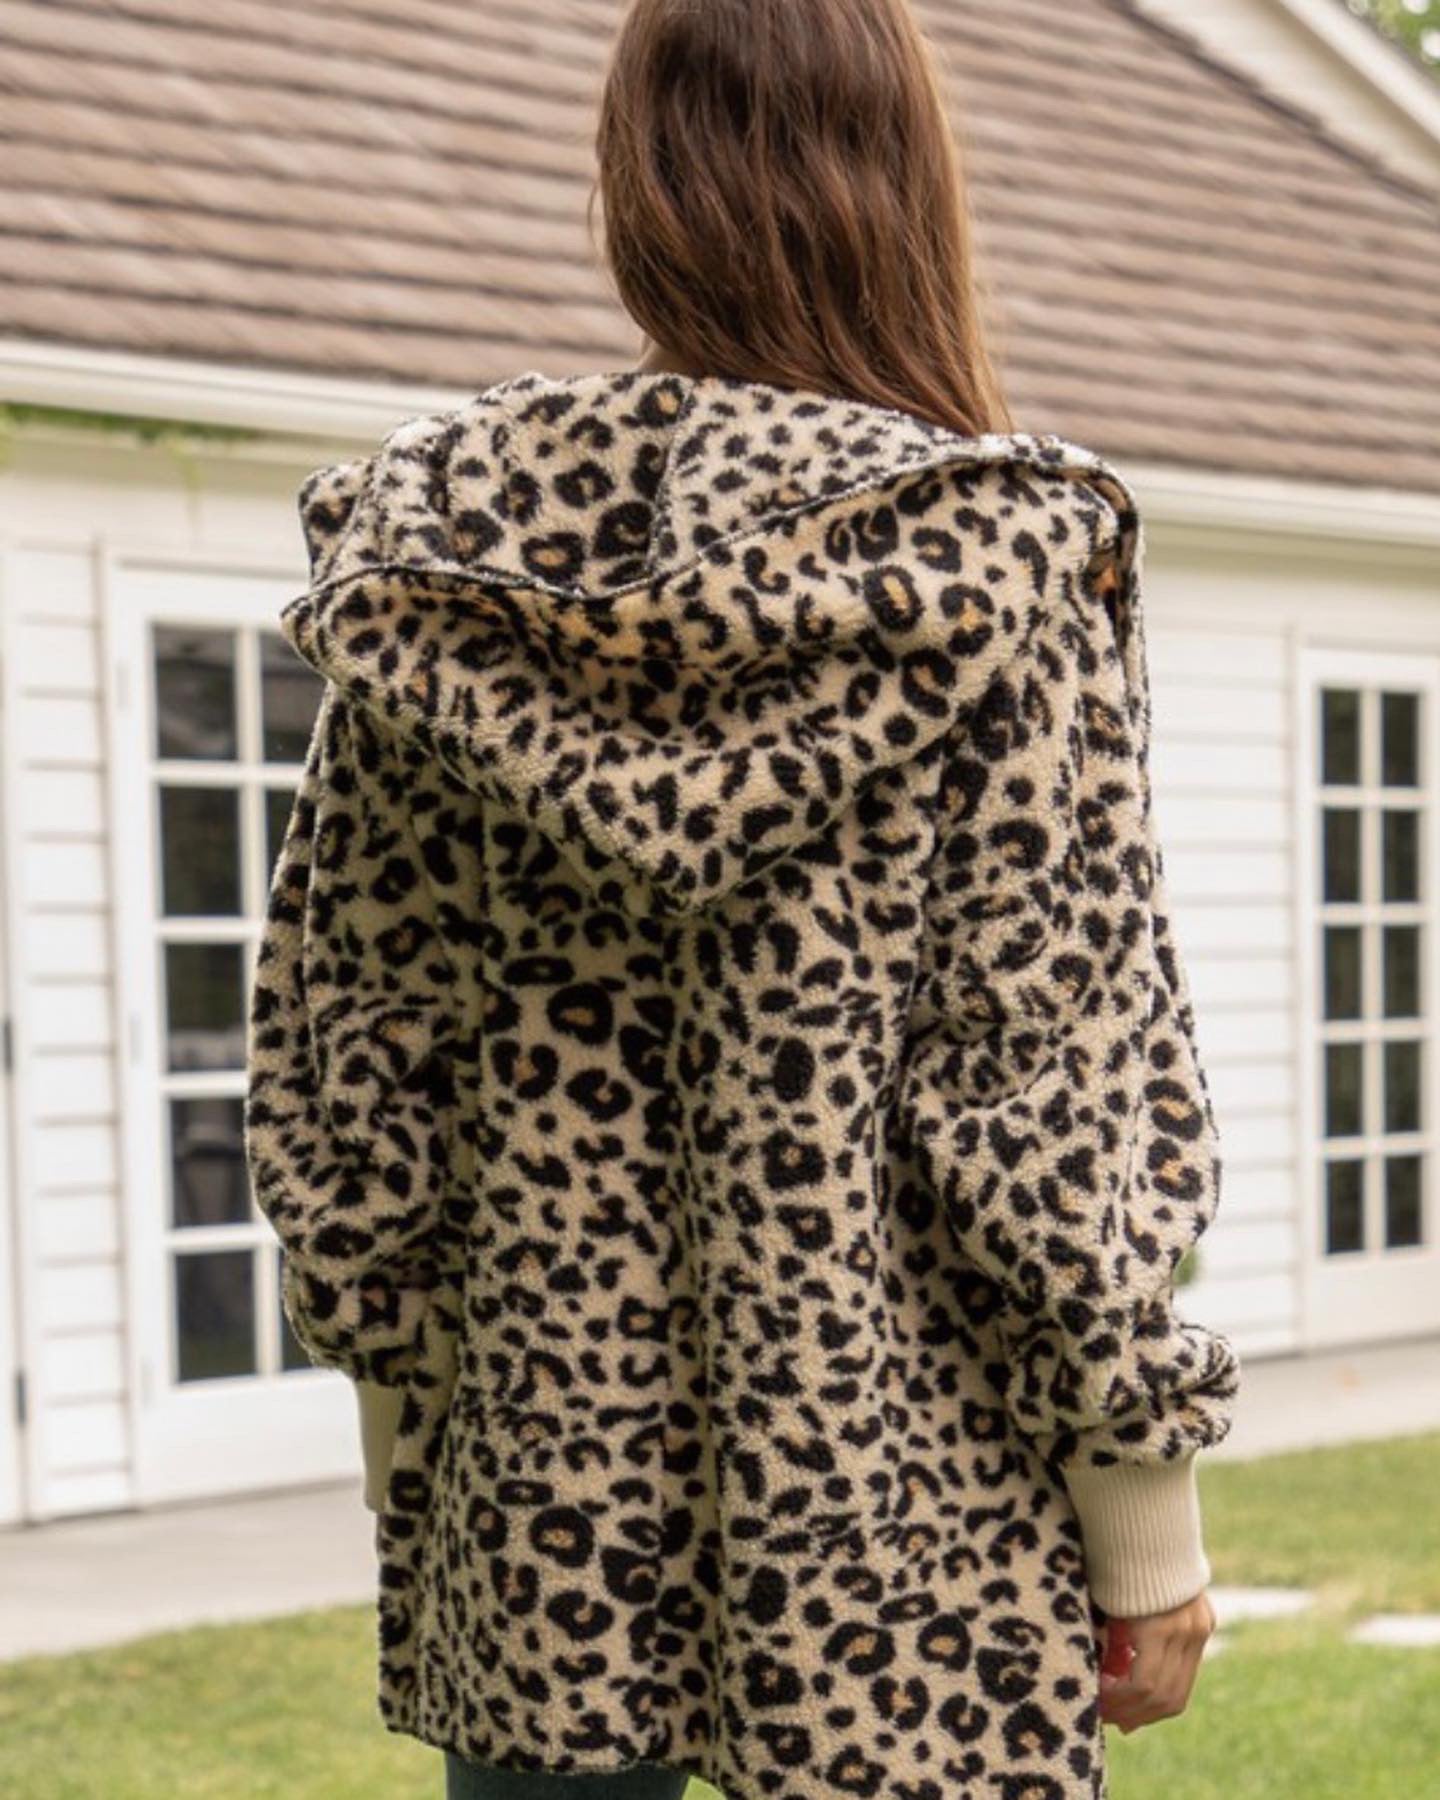 Leopard hooded jacket one size